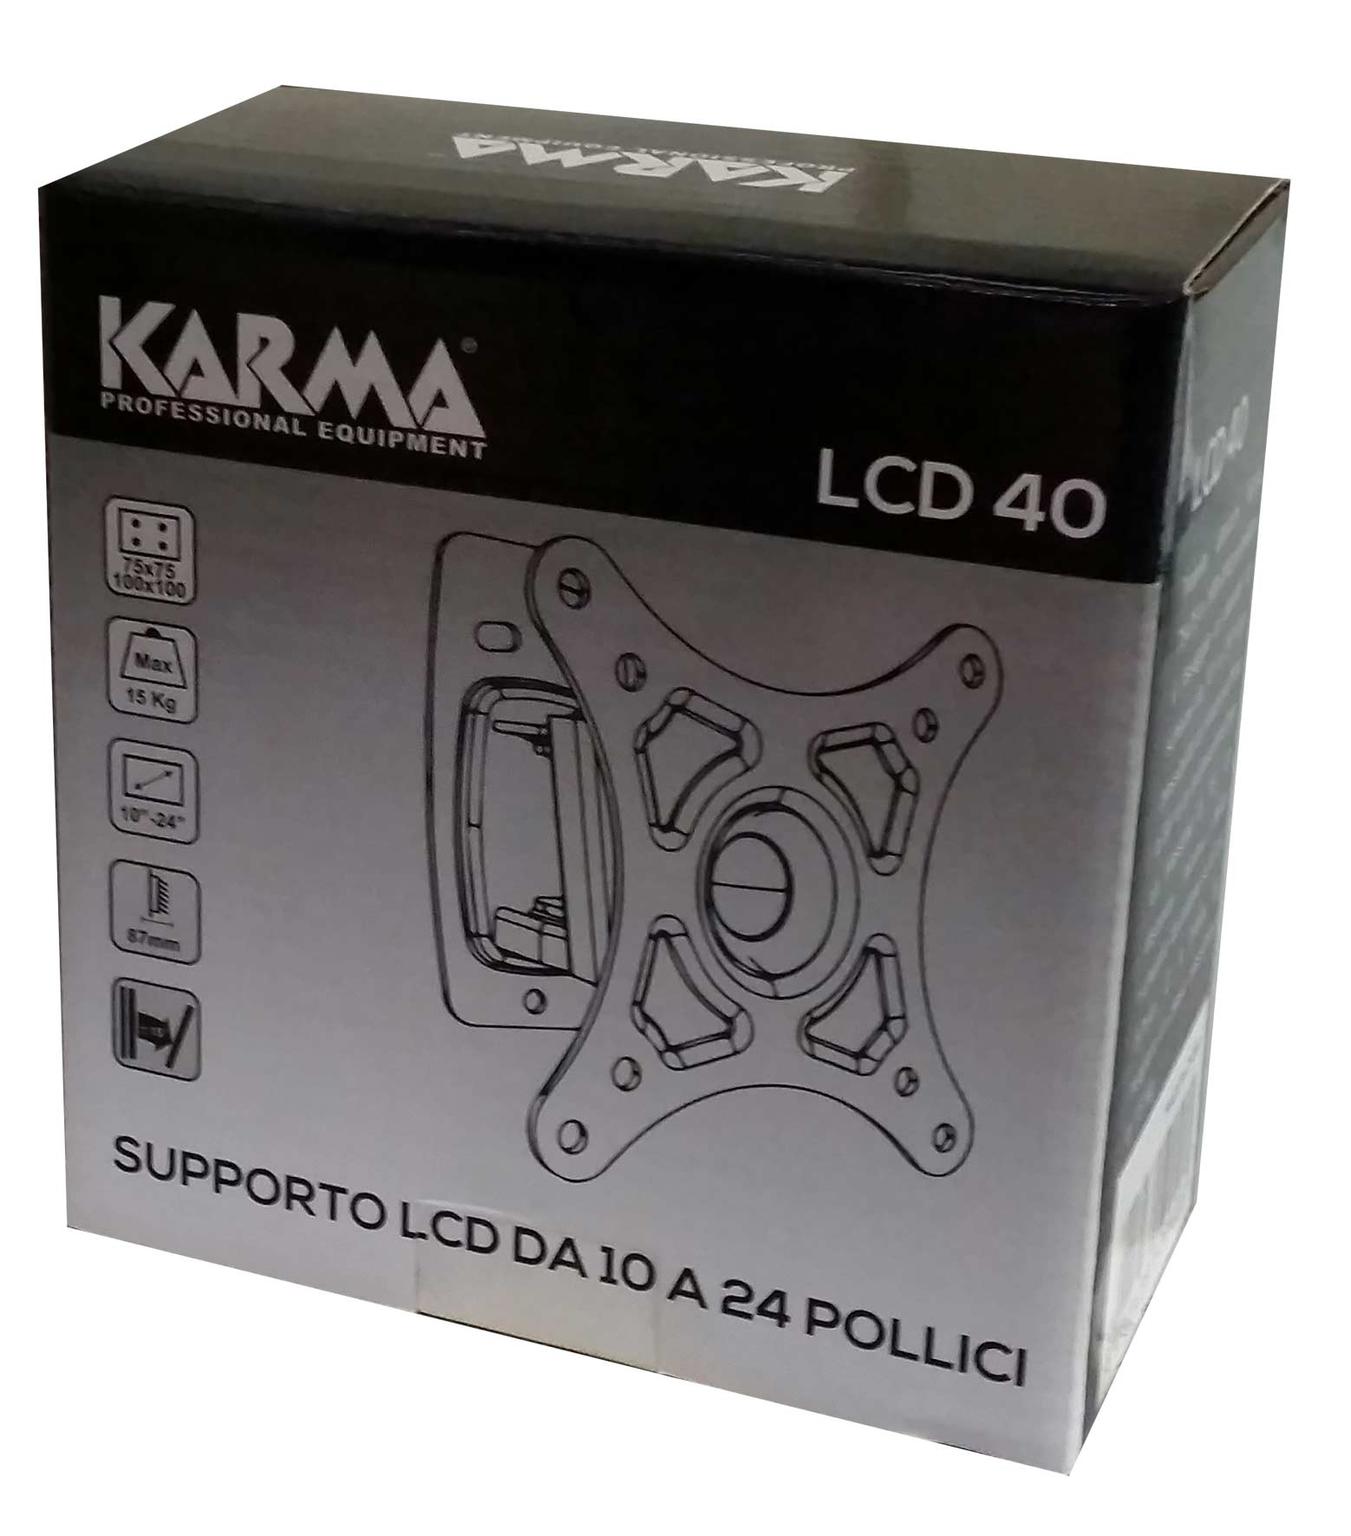 Karma LCD 40